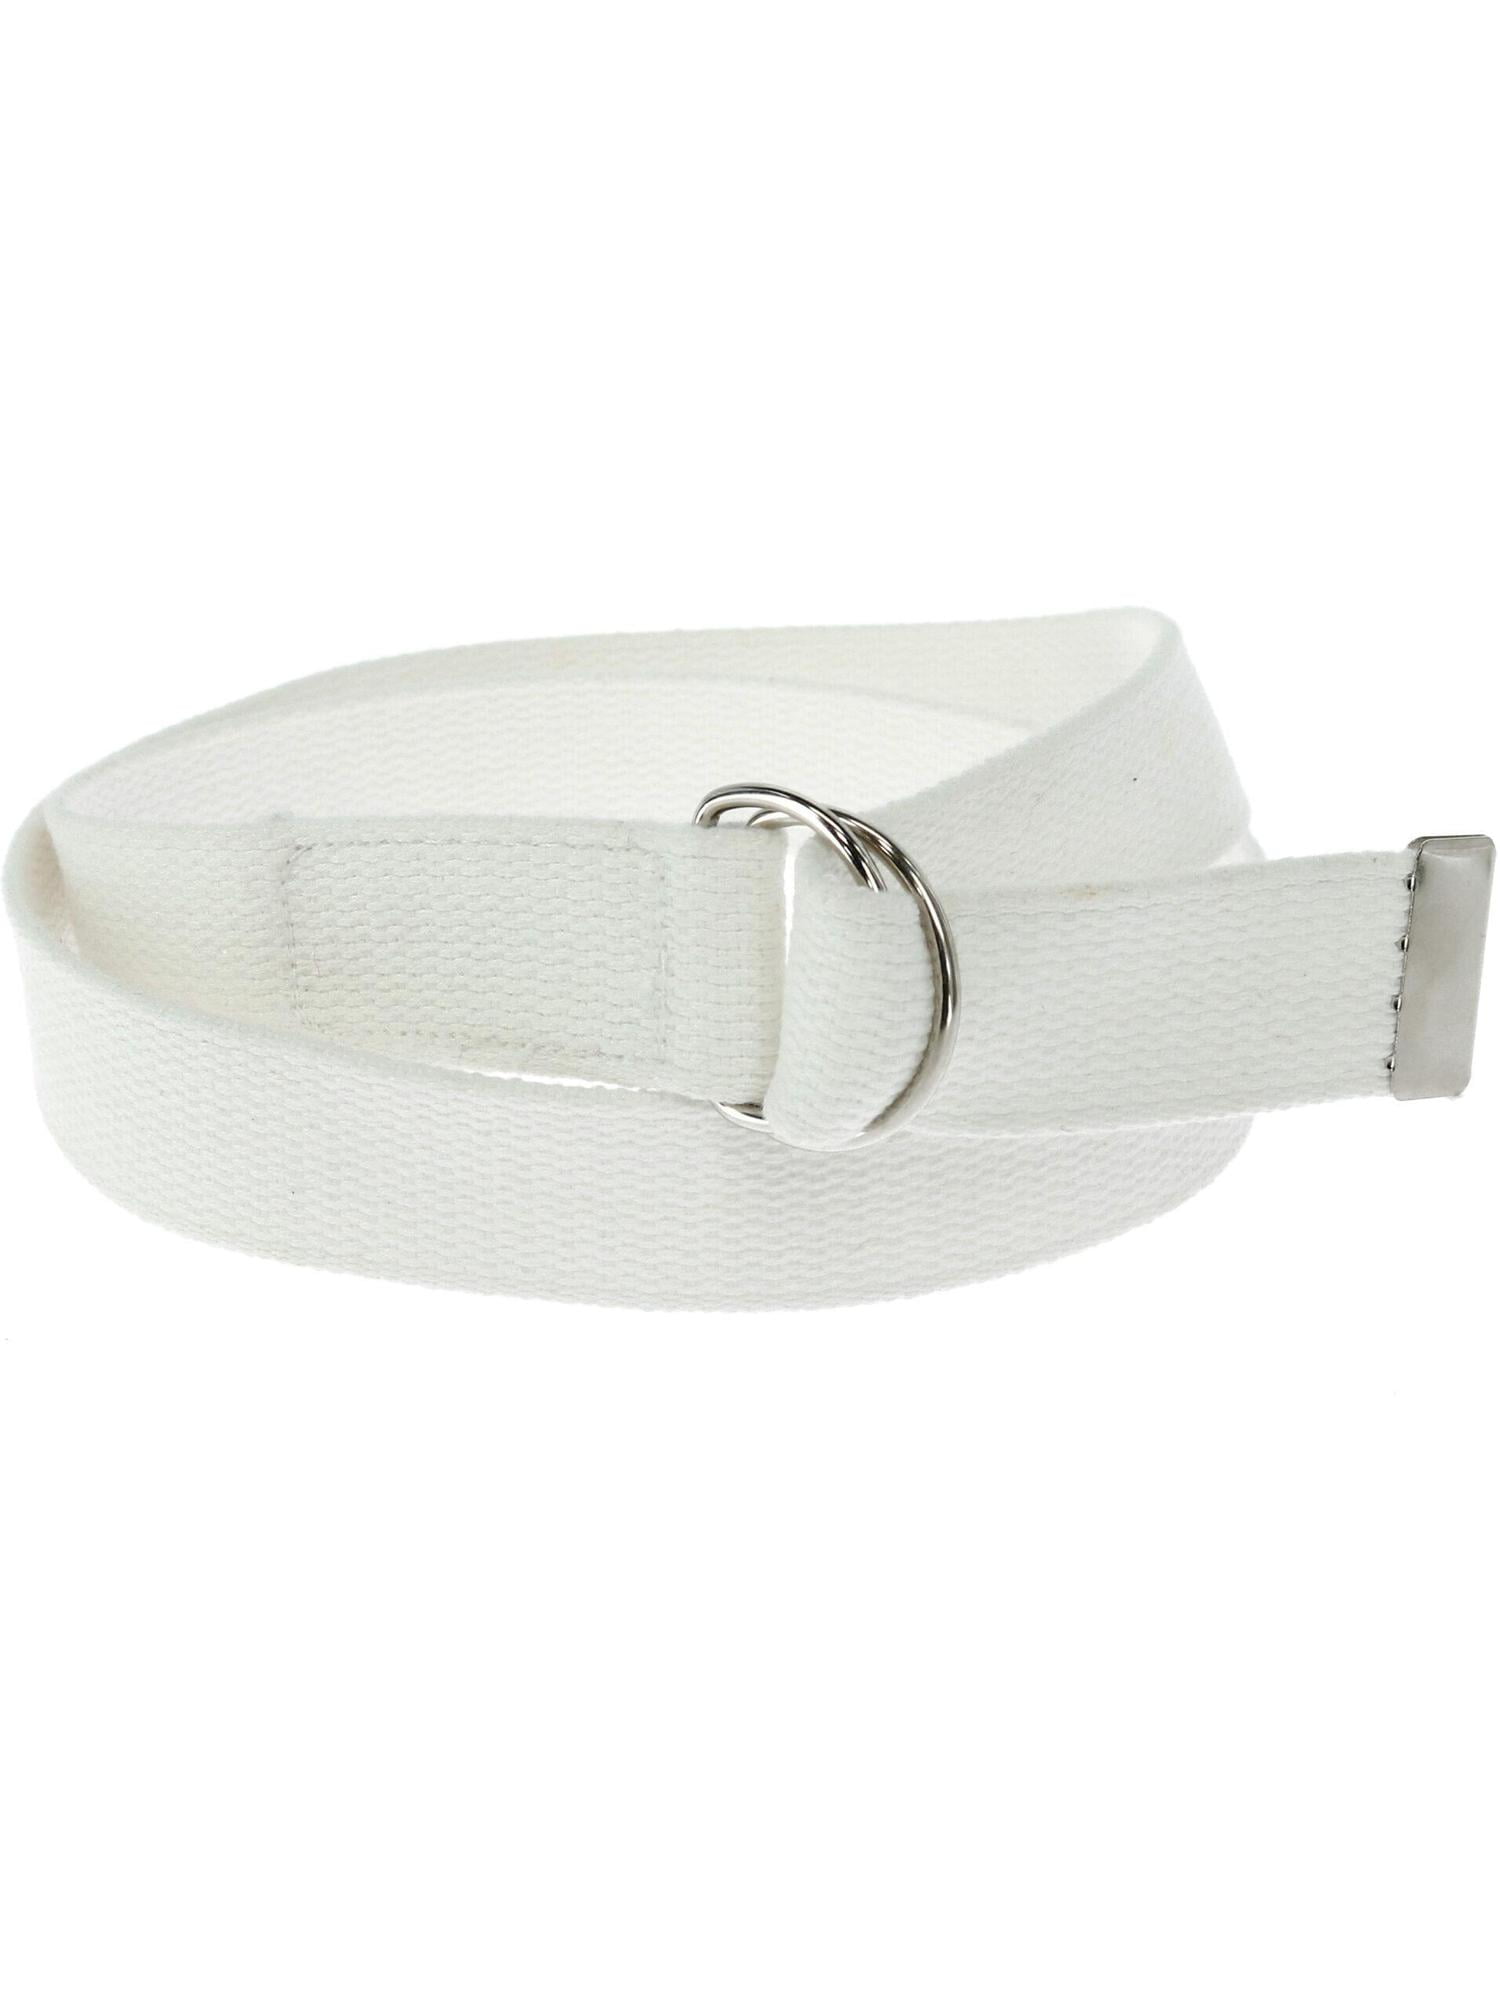 WHIPPY Men's Nylon Belt, Web Canvas Belt with Plastic Buckle